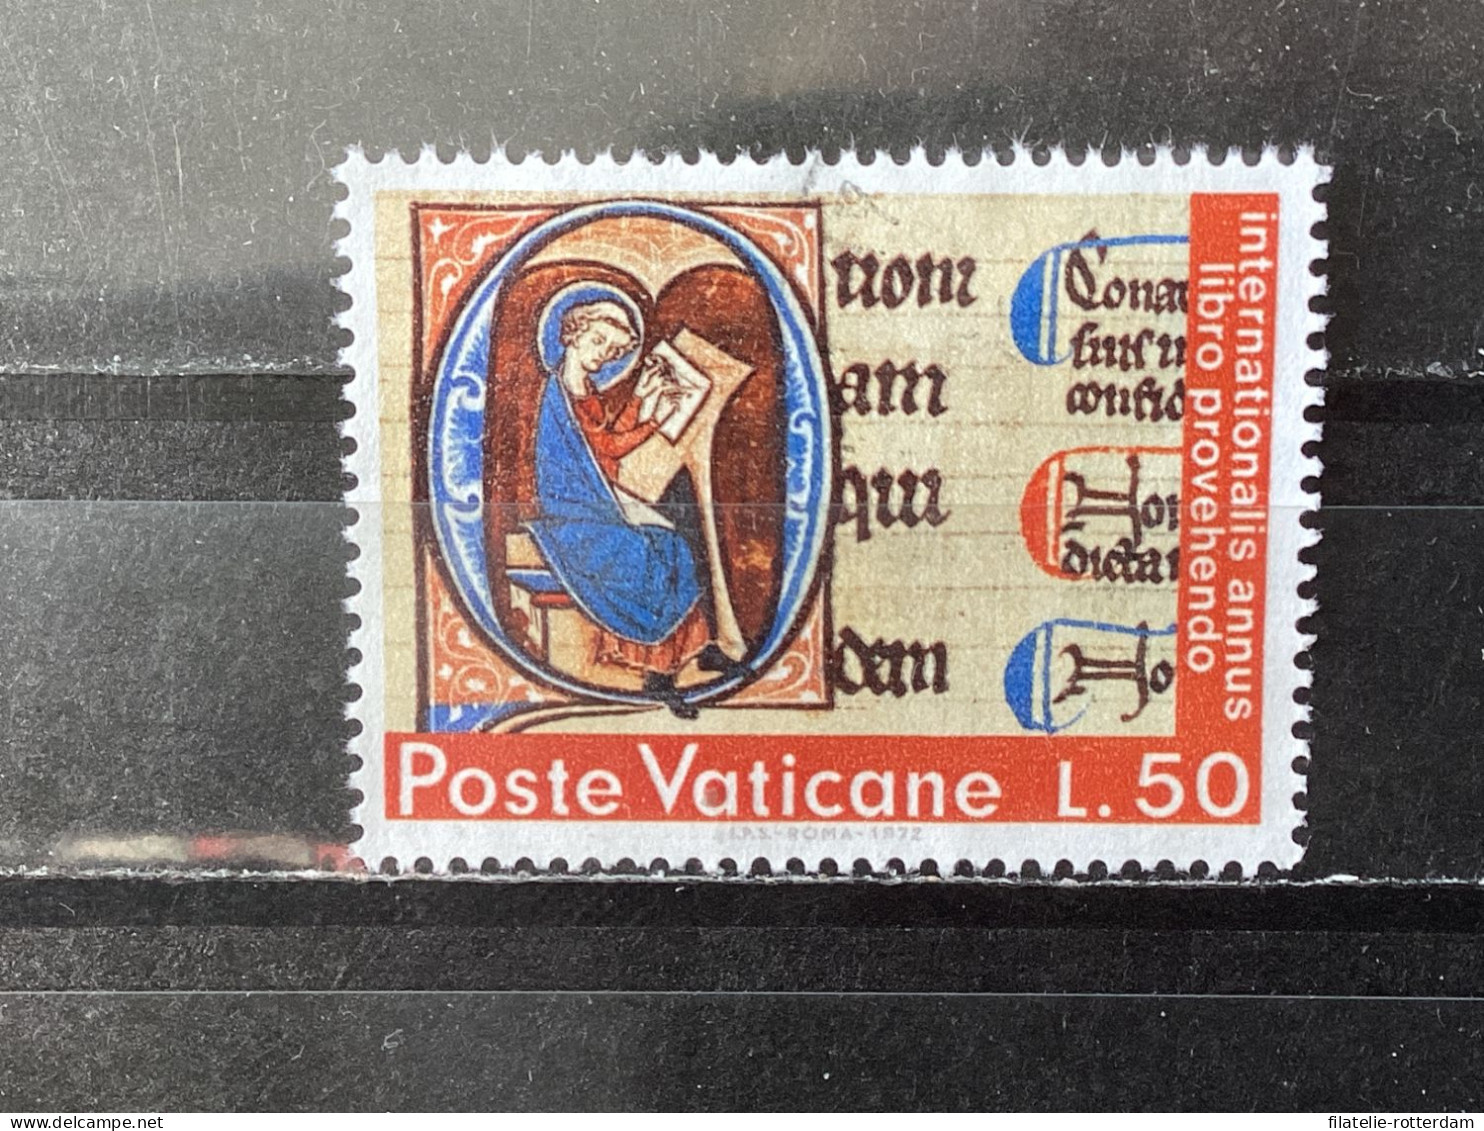 Vatican City / Vaticaanstad - International Year Of Books (50) 1972 - Used Stamps